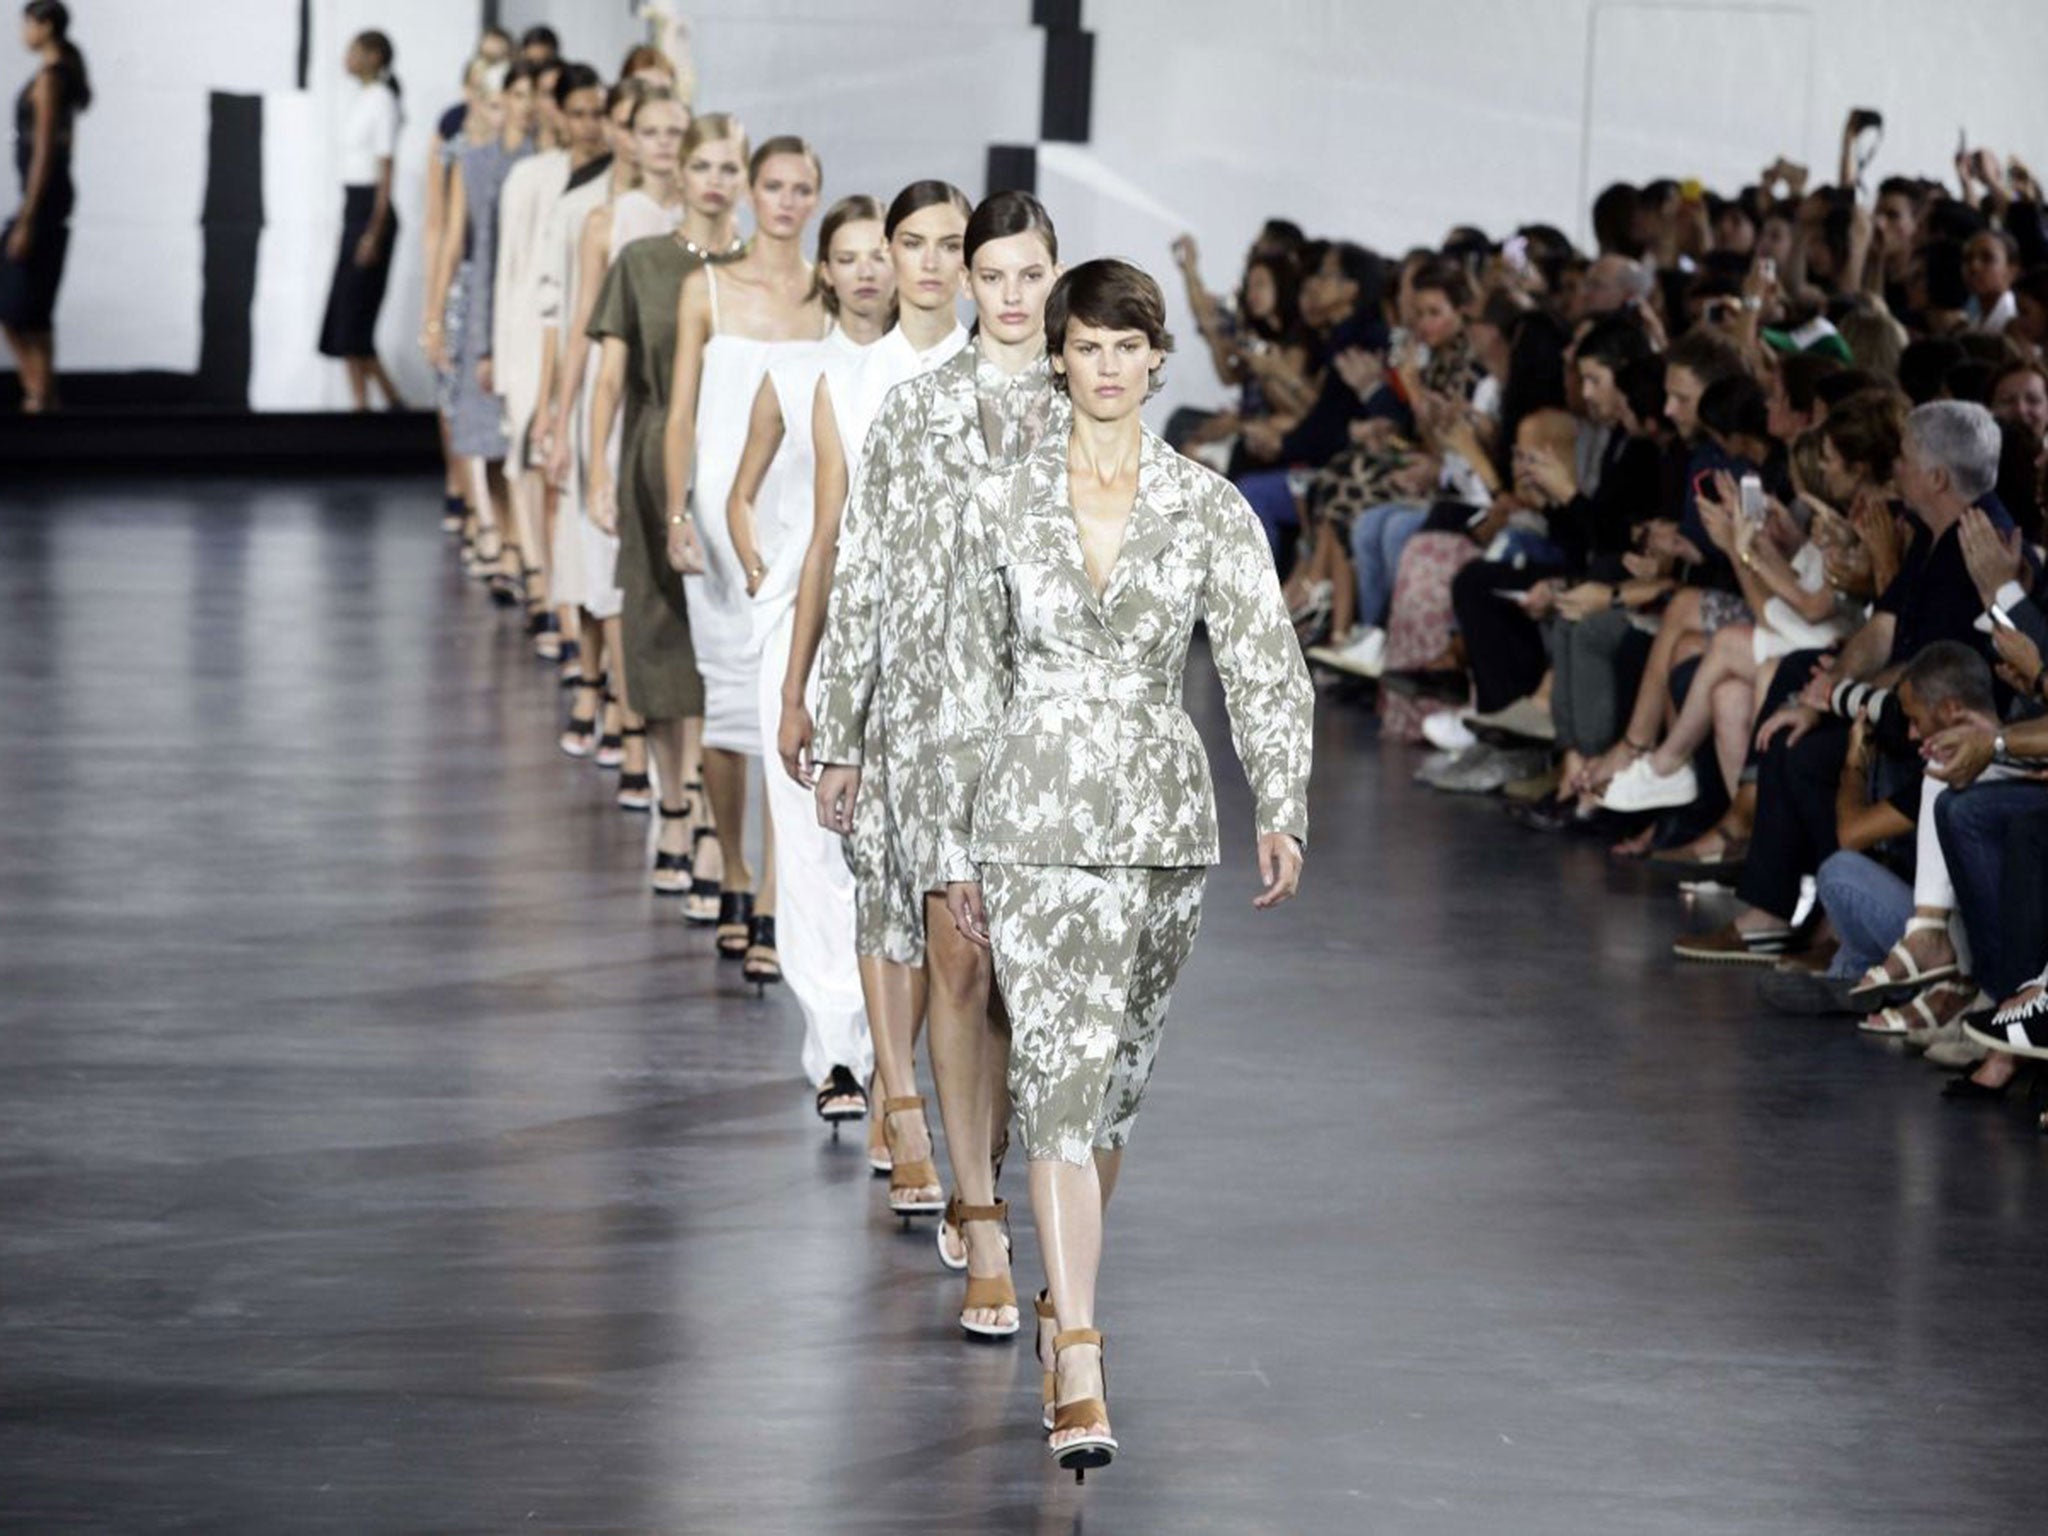 New York Fashion Week livestream | The Independent